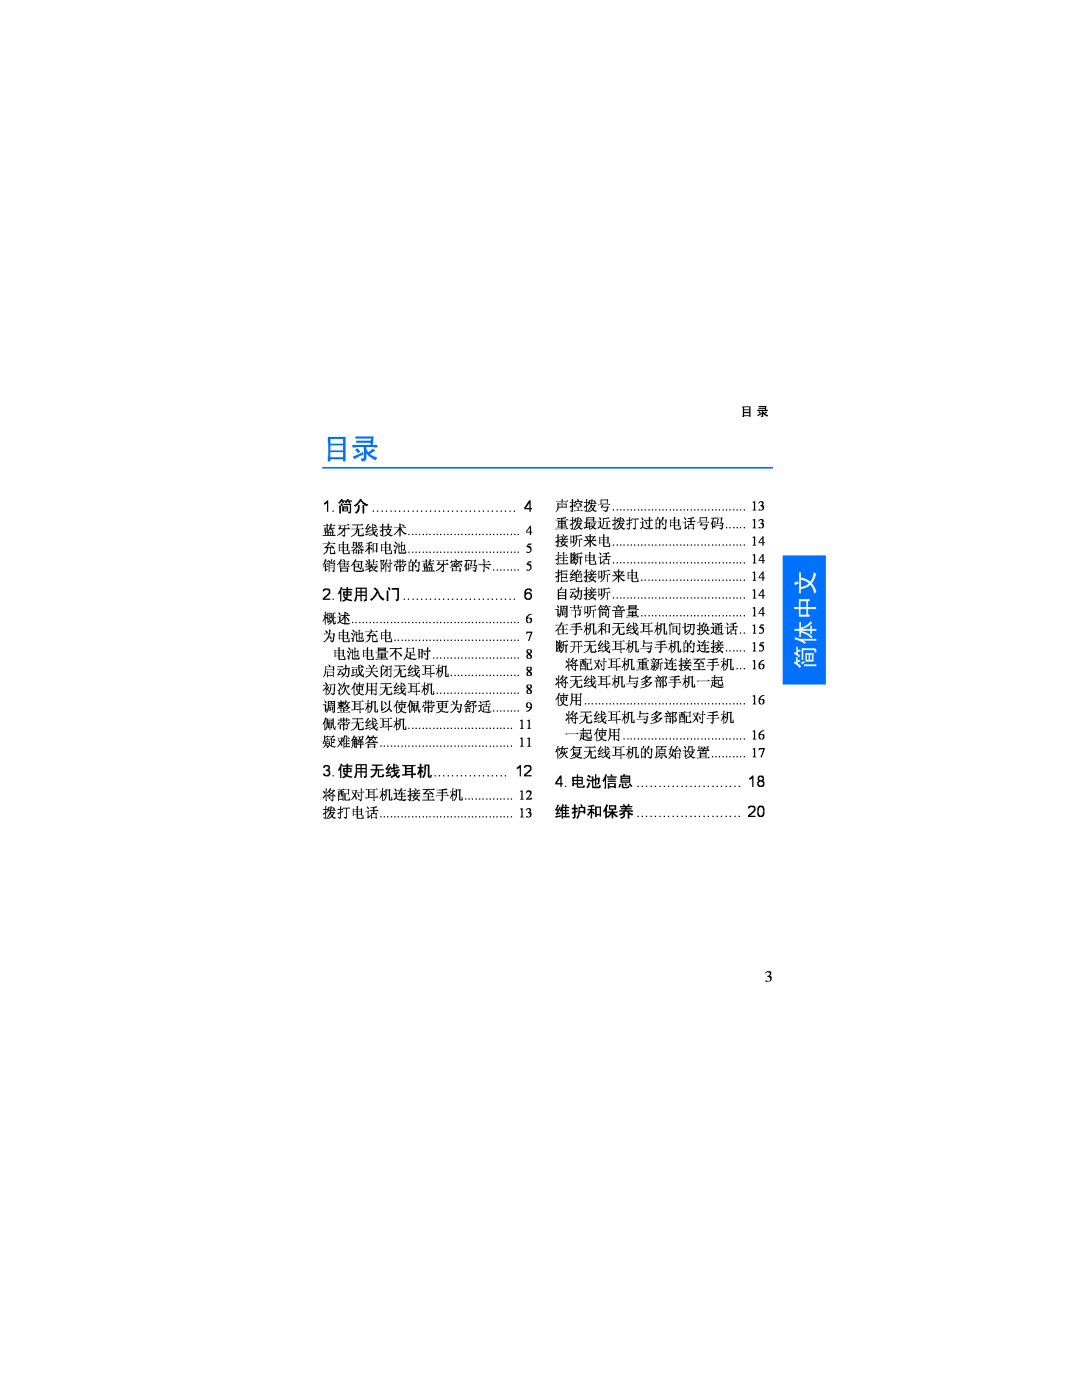 Nokia HDW-3 manual 简体中文 